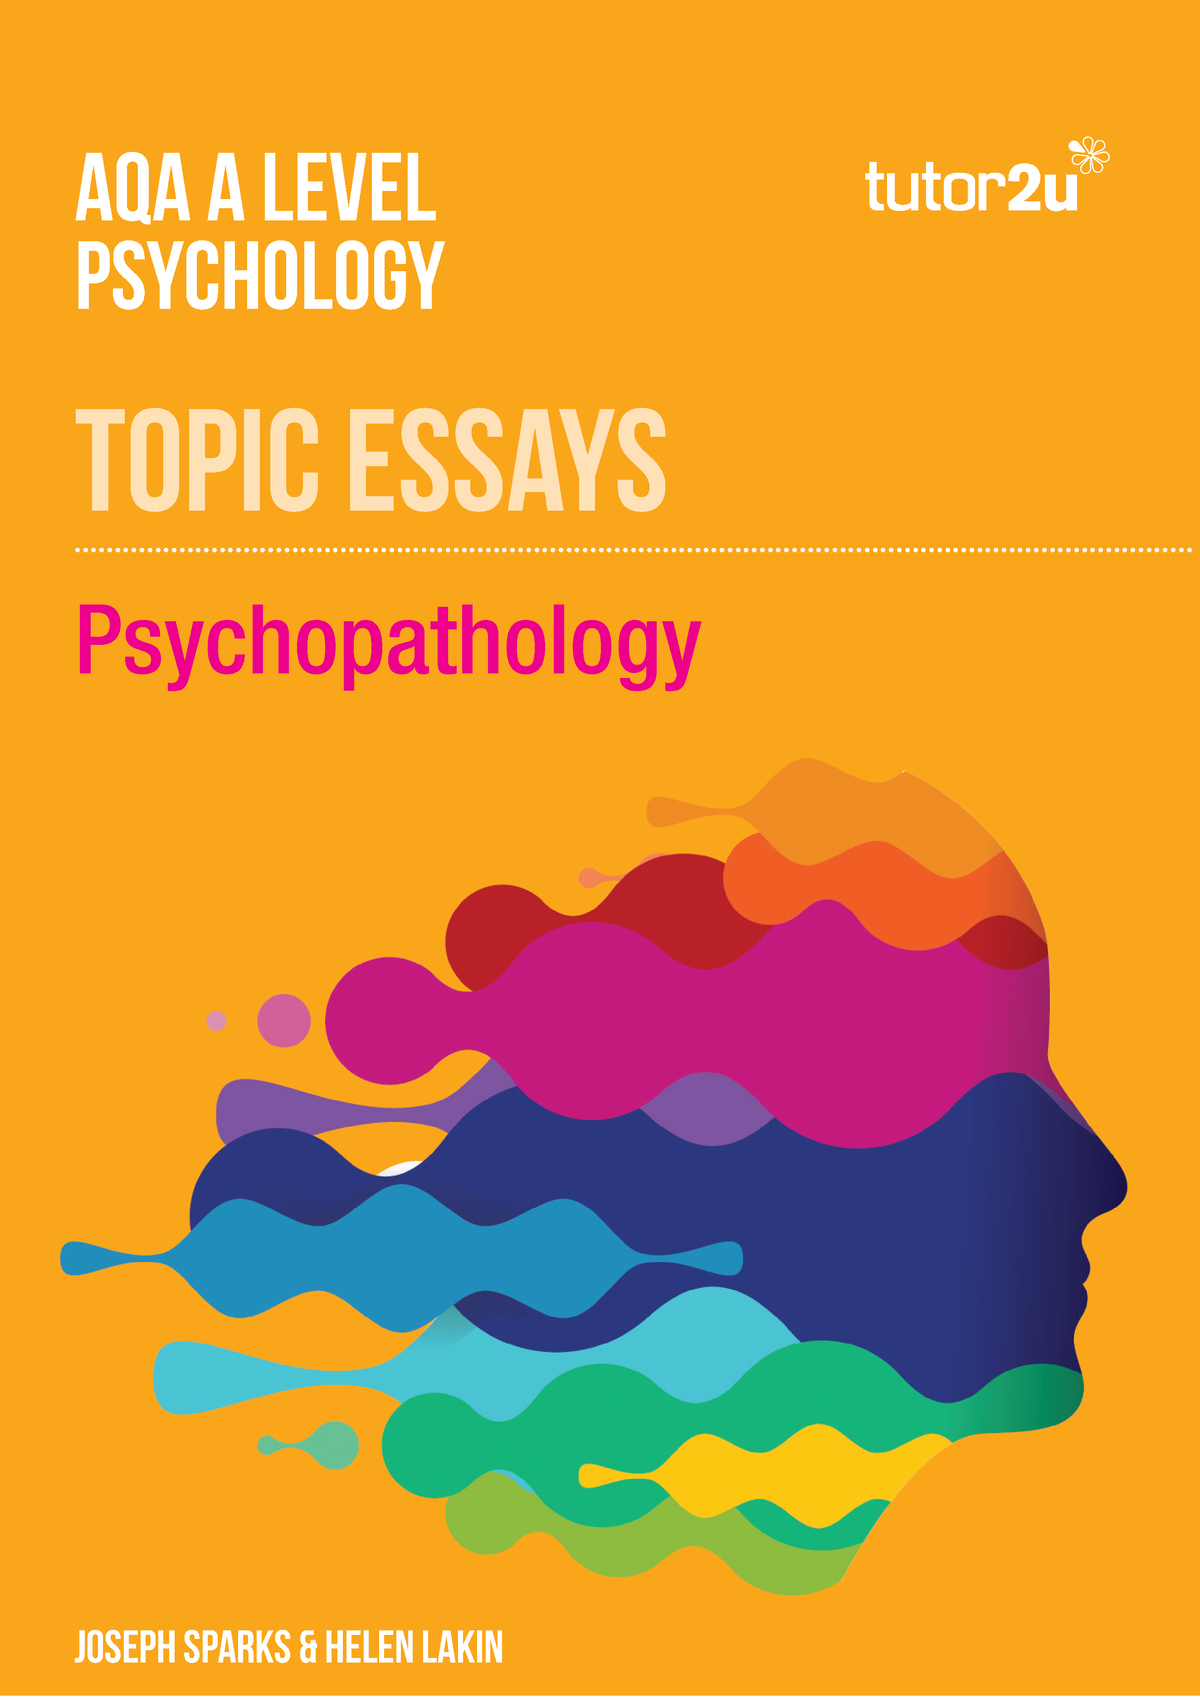 psychopathology topic essays for aqa a level psychology